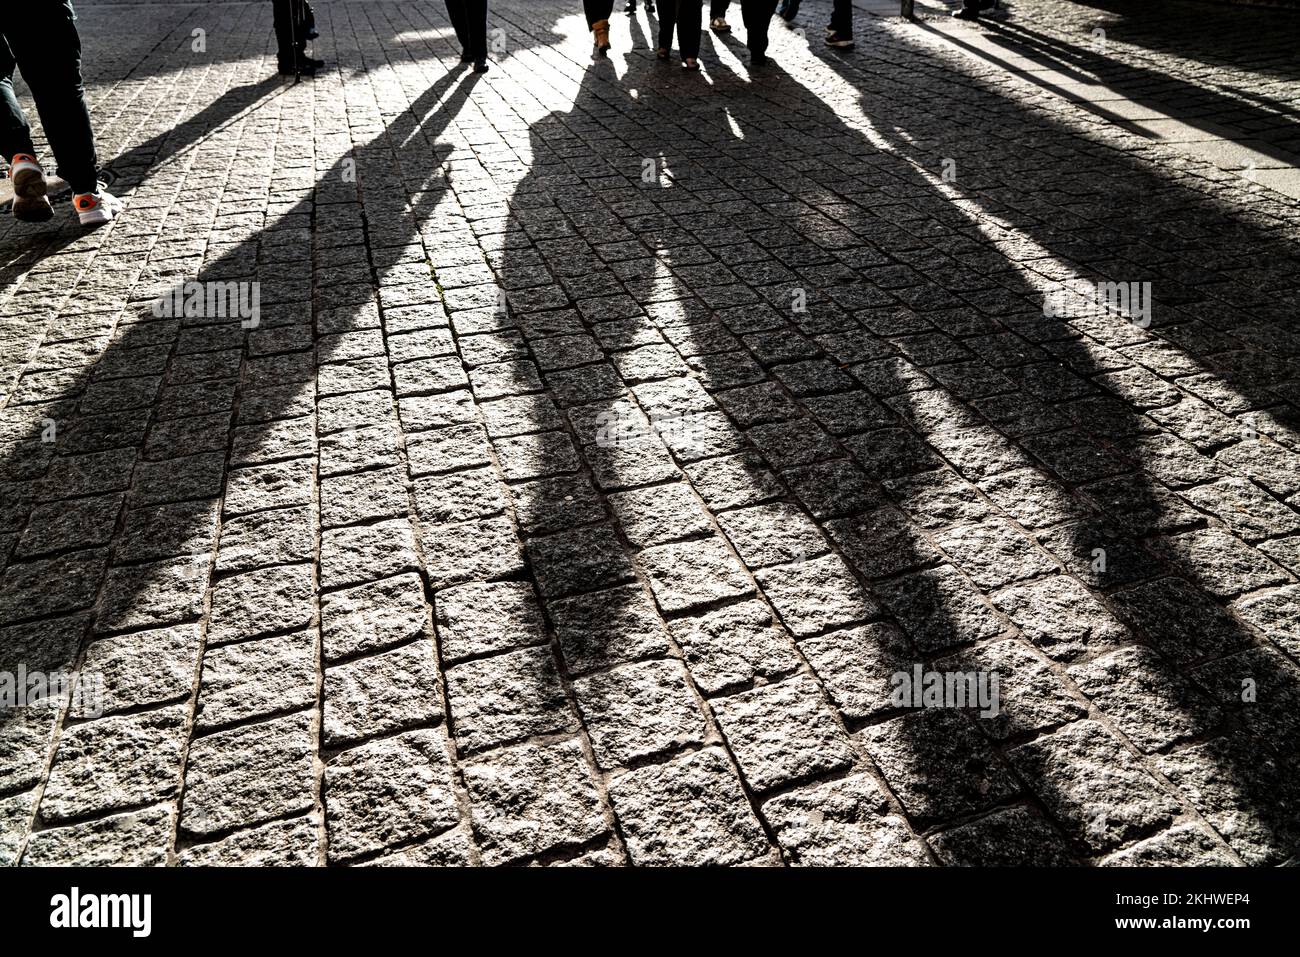 Pedestrians in a pedestrian zone, winter, long shadows, Dortmund, NRW, Germany, Stock Photo